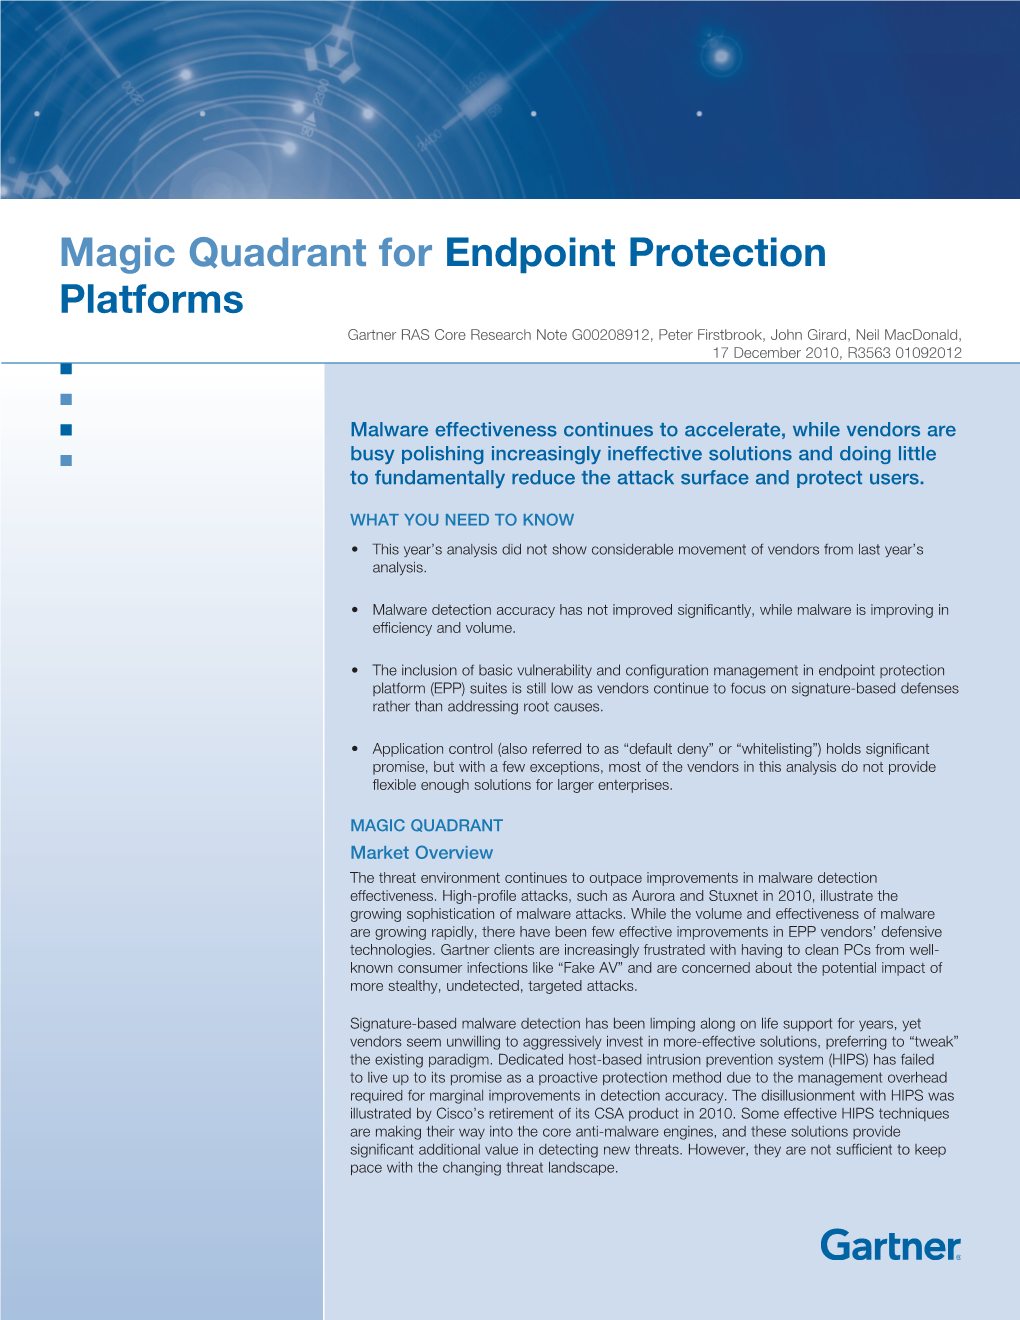 Gartner's Magic Quadrant for Endpoint Protection Platform 2010